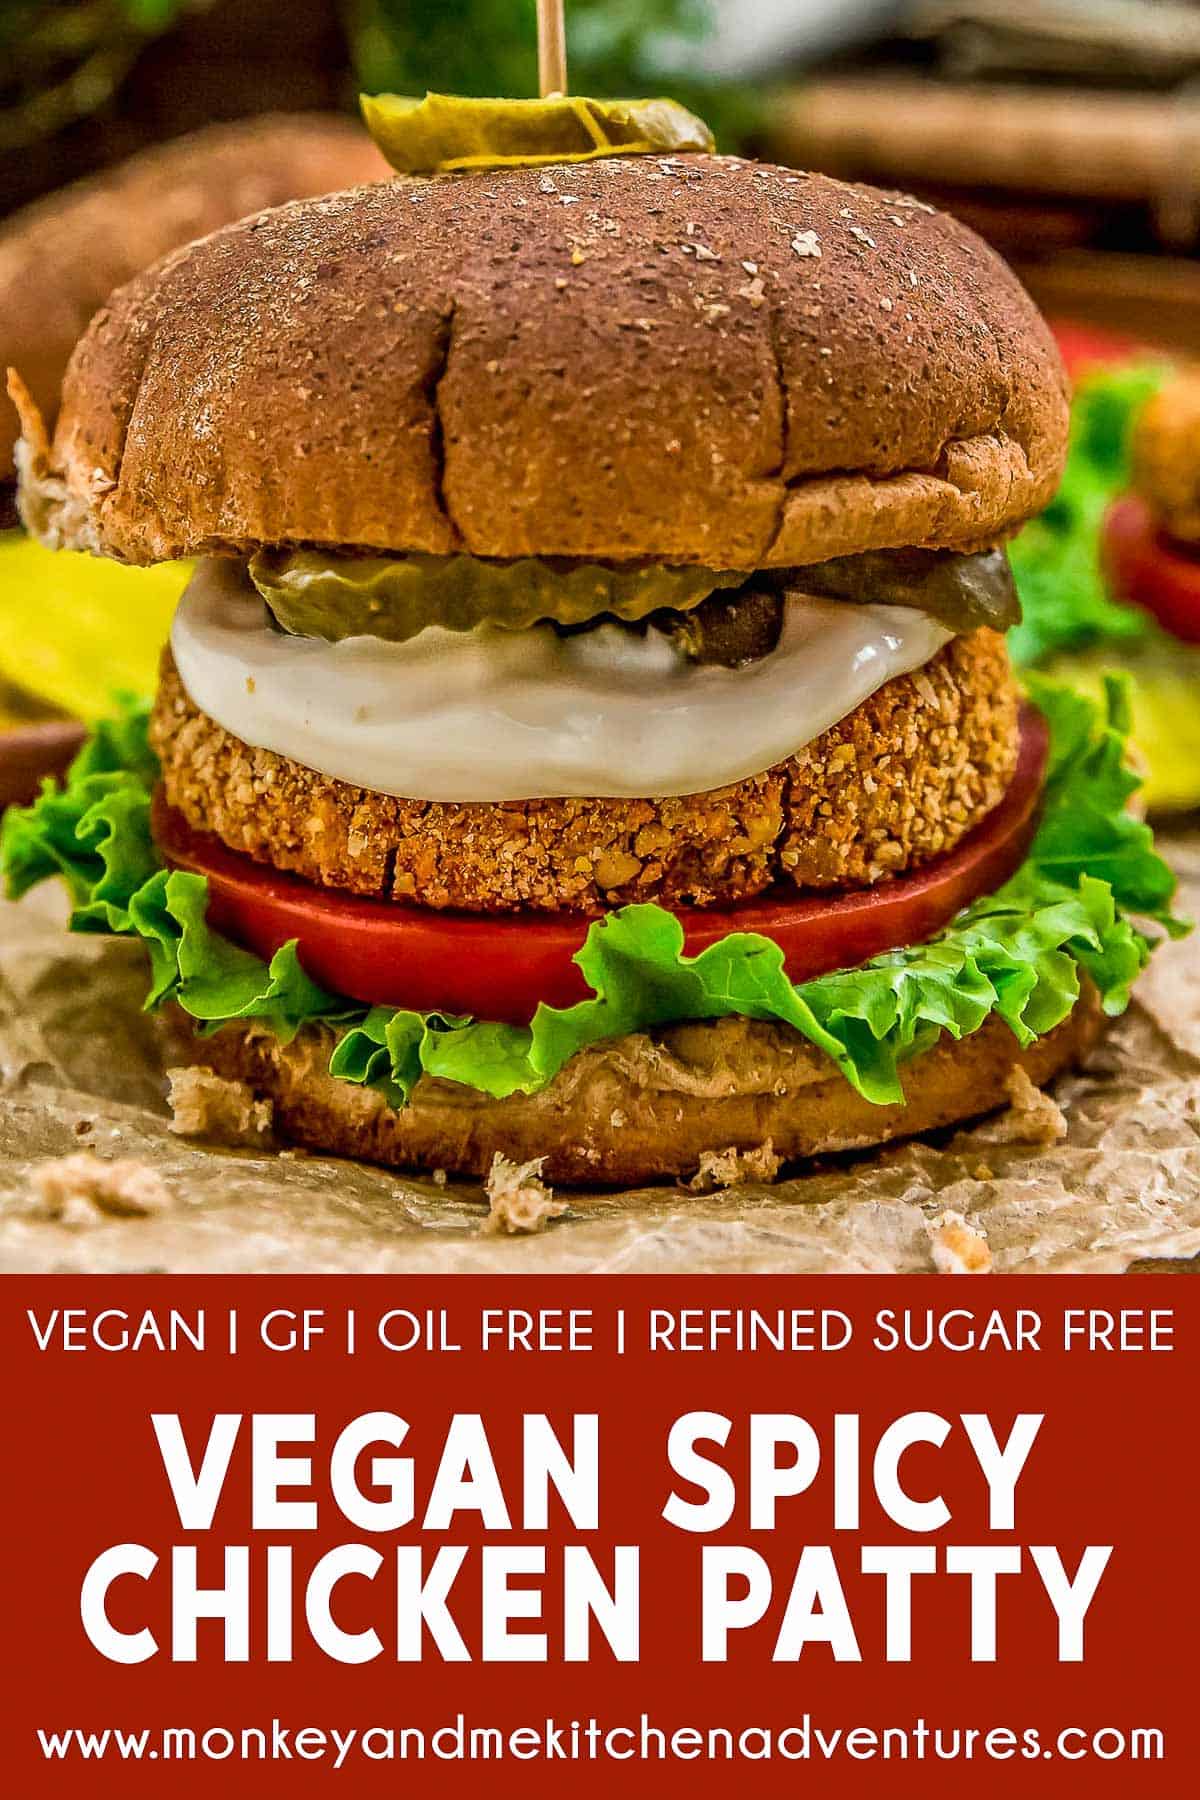 Vegan Spicy “Chicken” Patty with text description